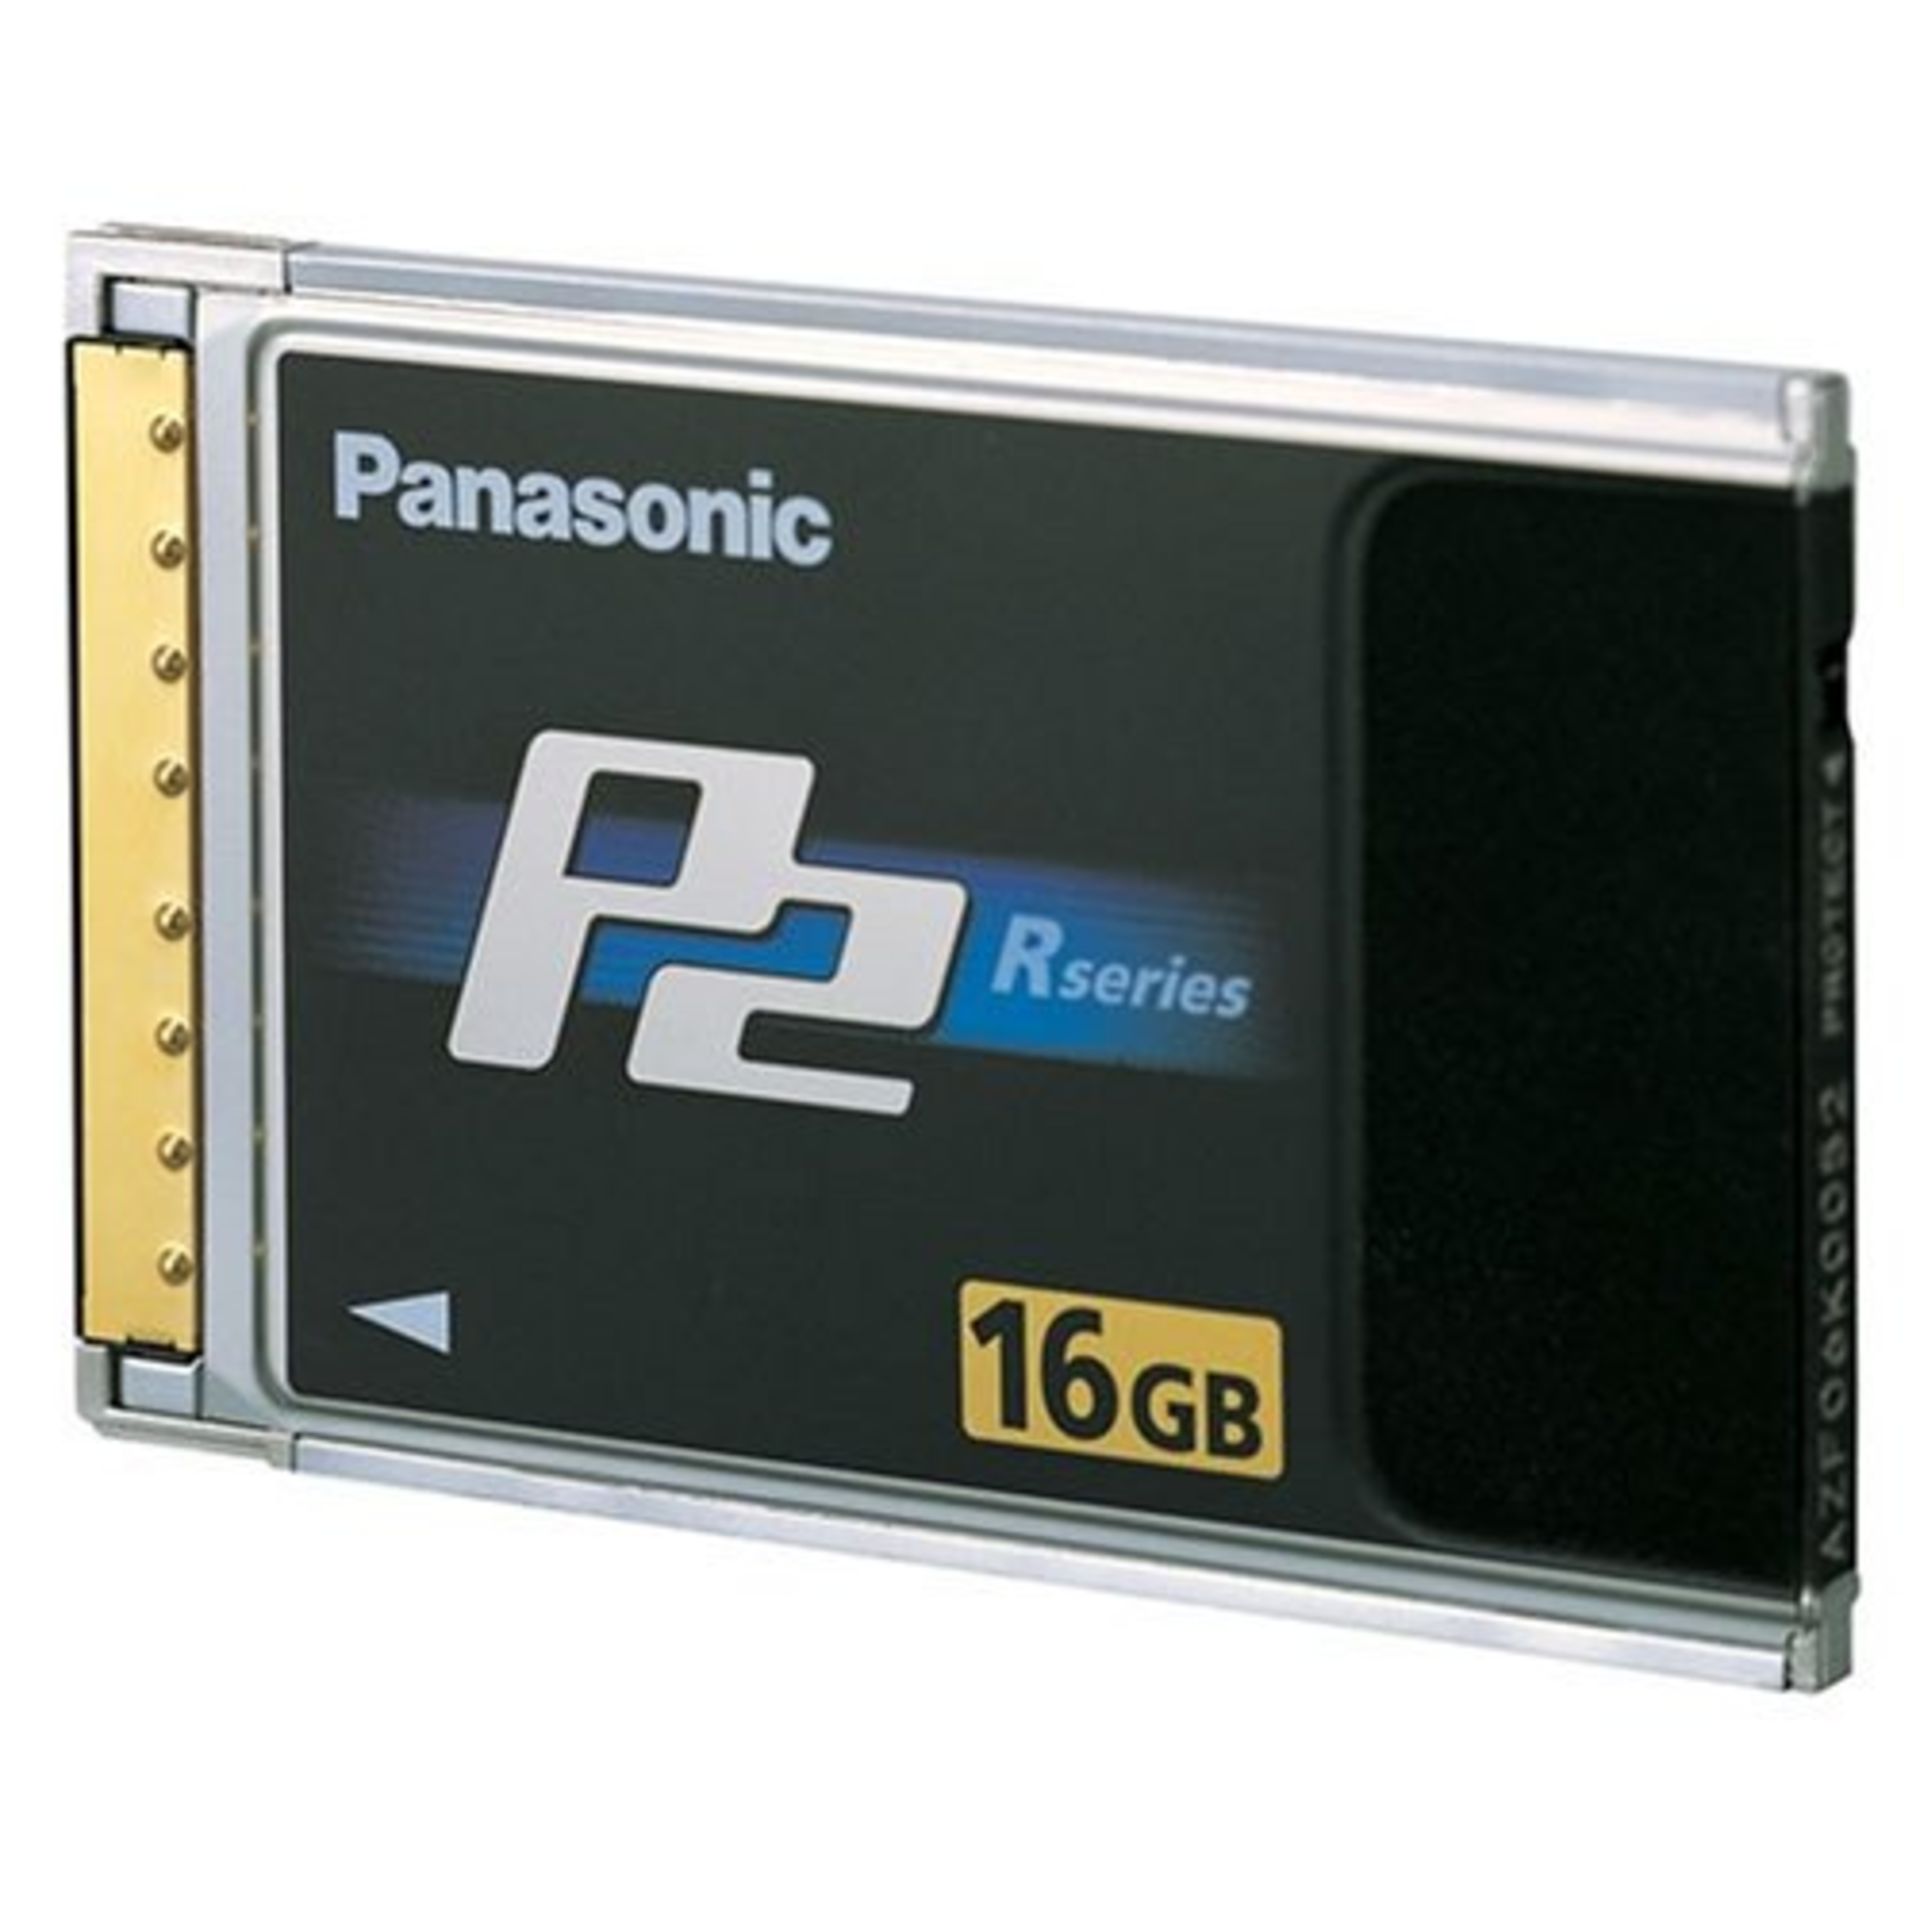 RRP £350.00 Panasonic P2 16GB RSeries card - Image 7 of 12